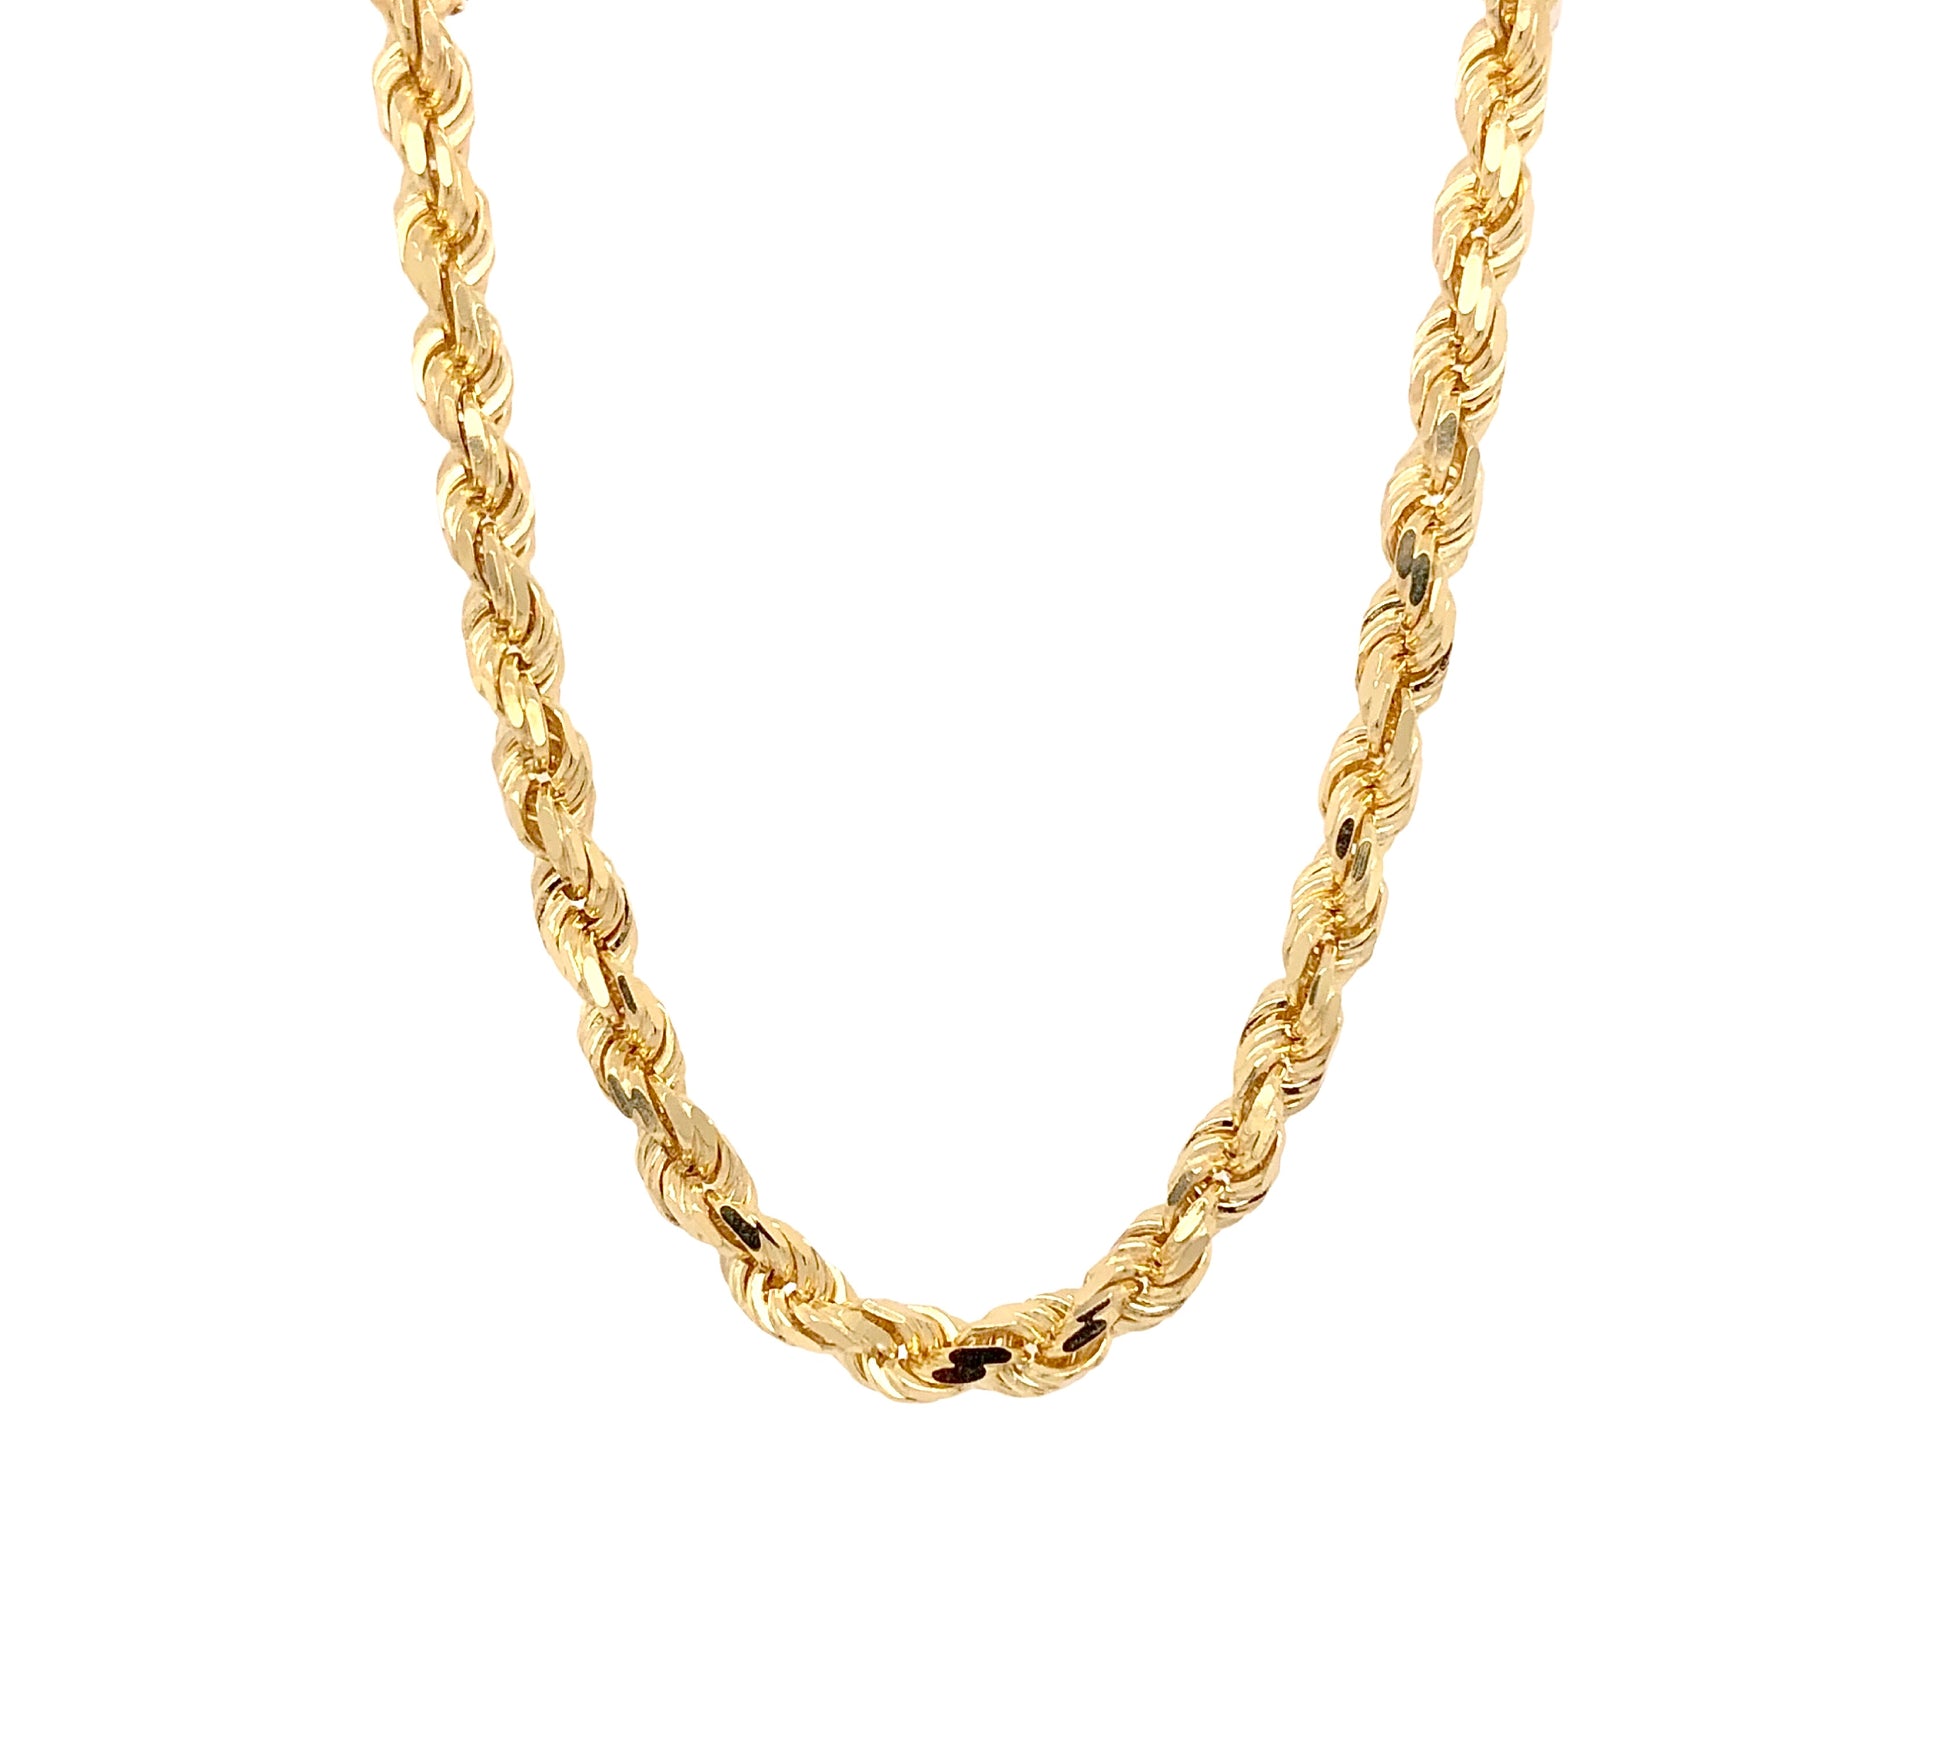 10k yellow gold diamond-cut rope chain 